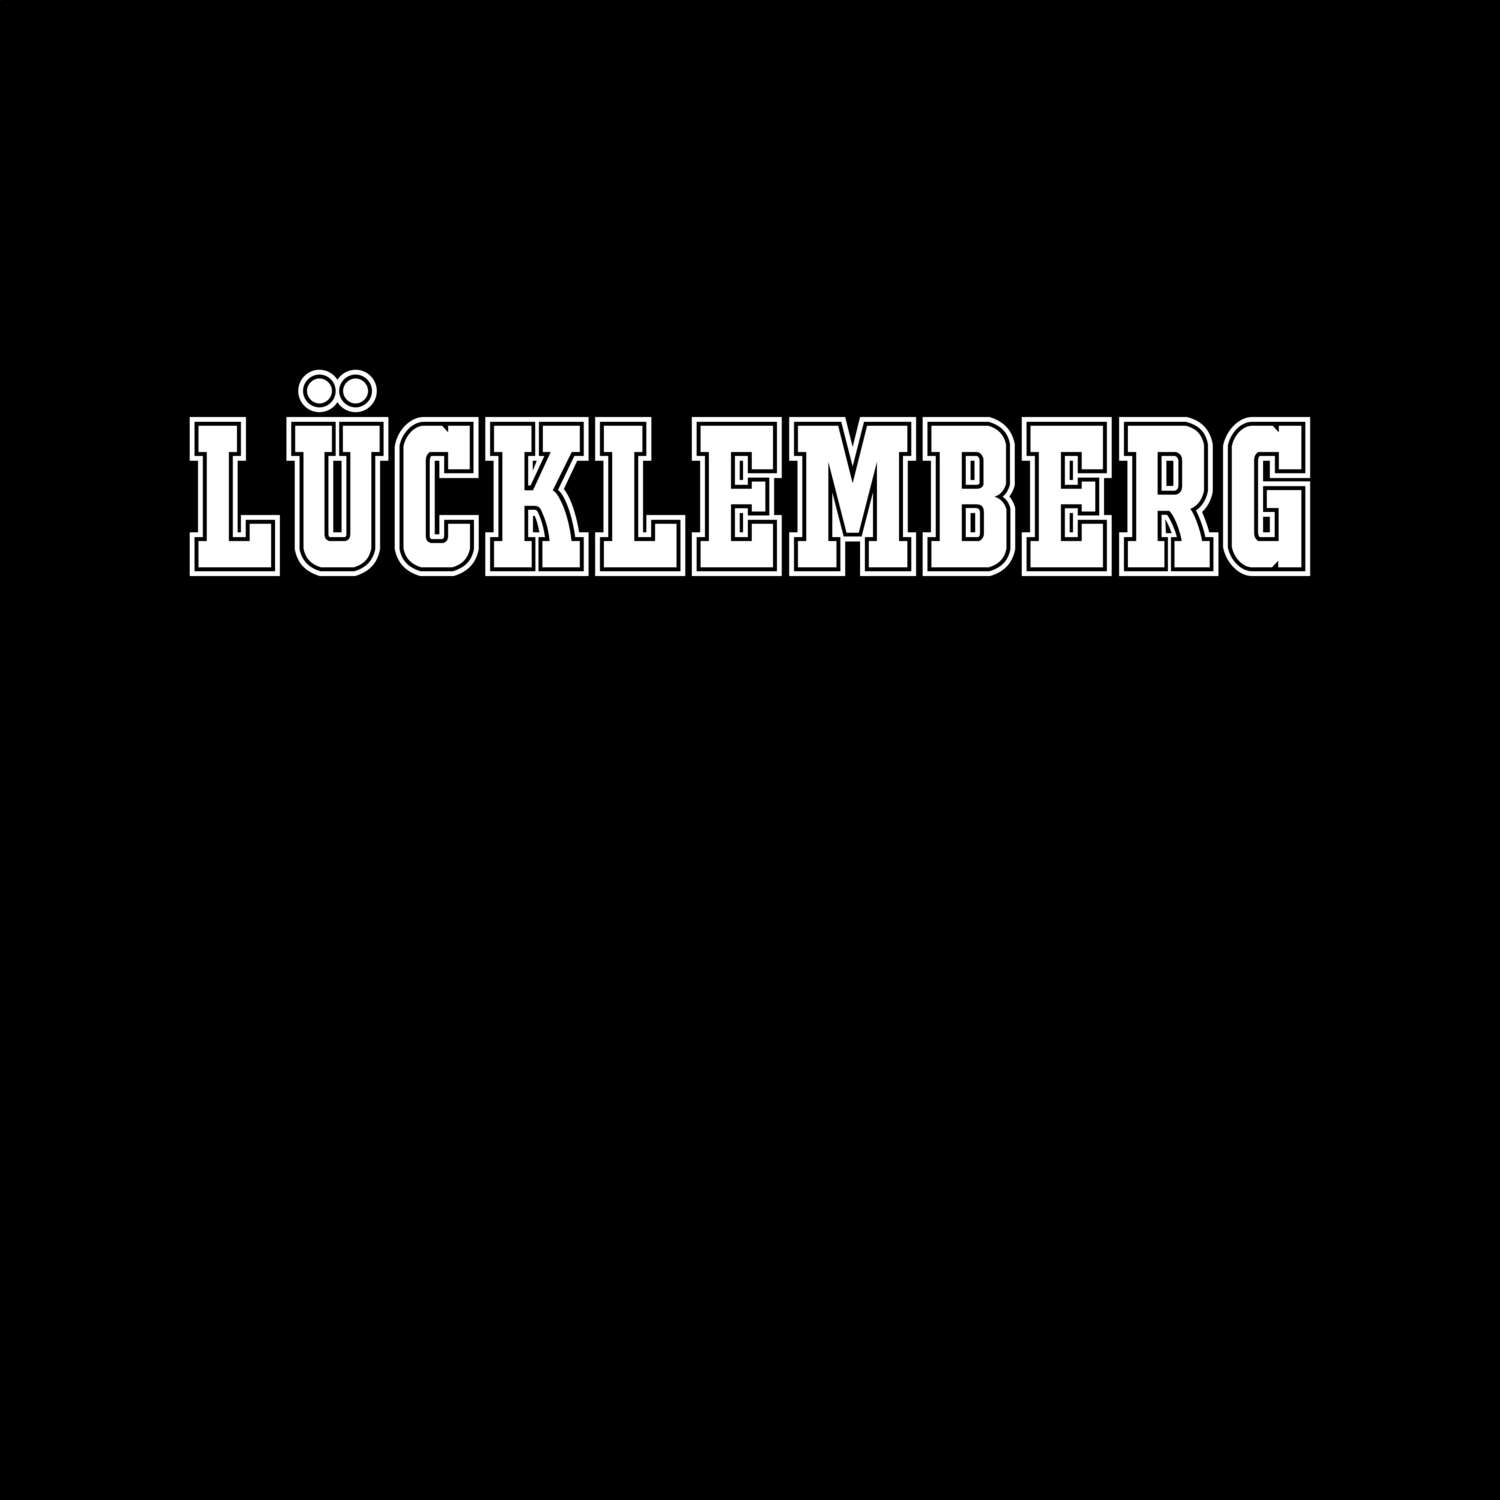 Lücklemberg T-Shirt »Classic«